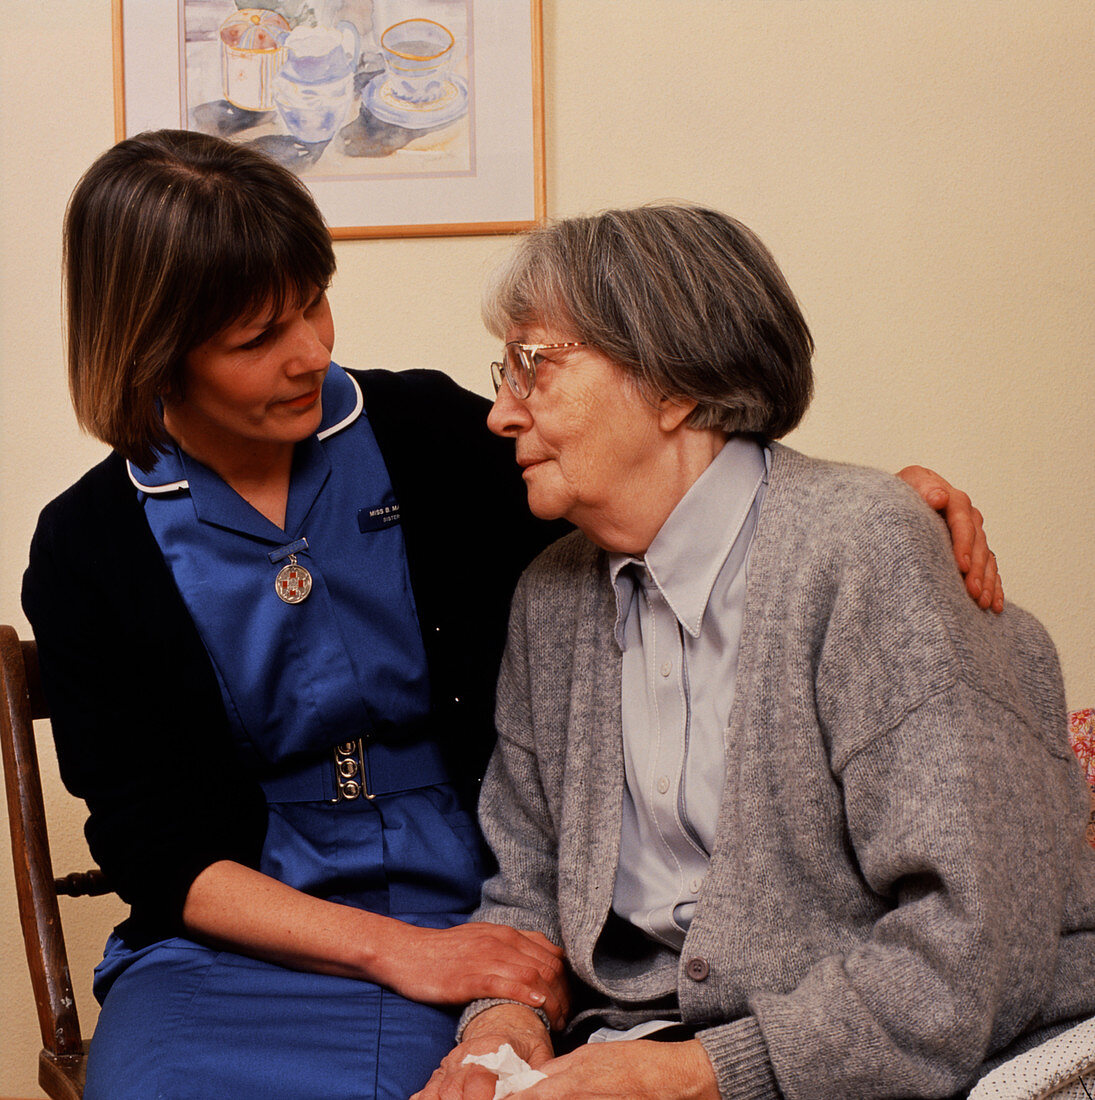 District nurse comforts an elderly patient